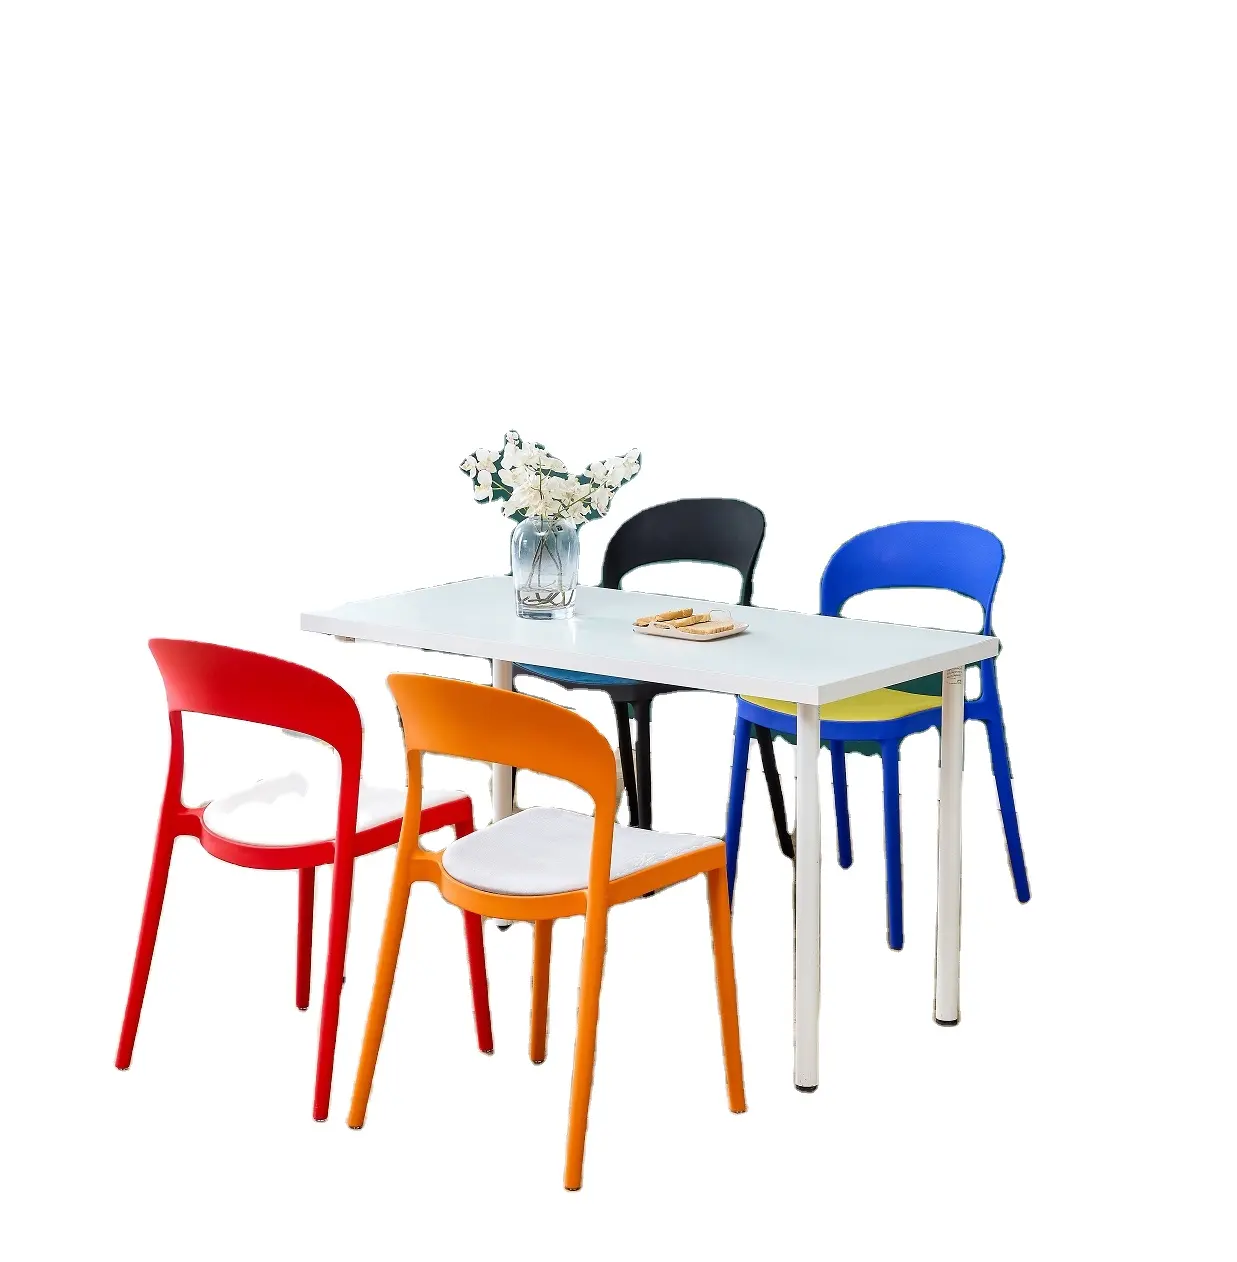 Cadeira de plástico de jantar Pp verde italiana moderna e moderna para exterior modelo novo barato